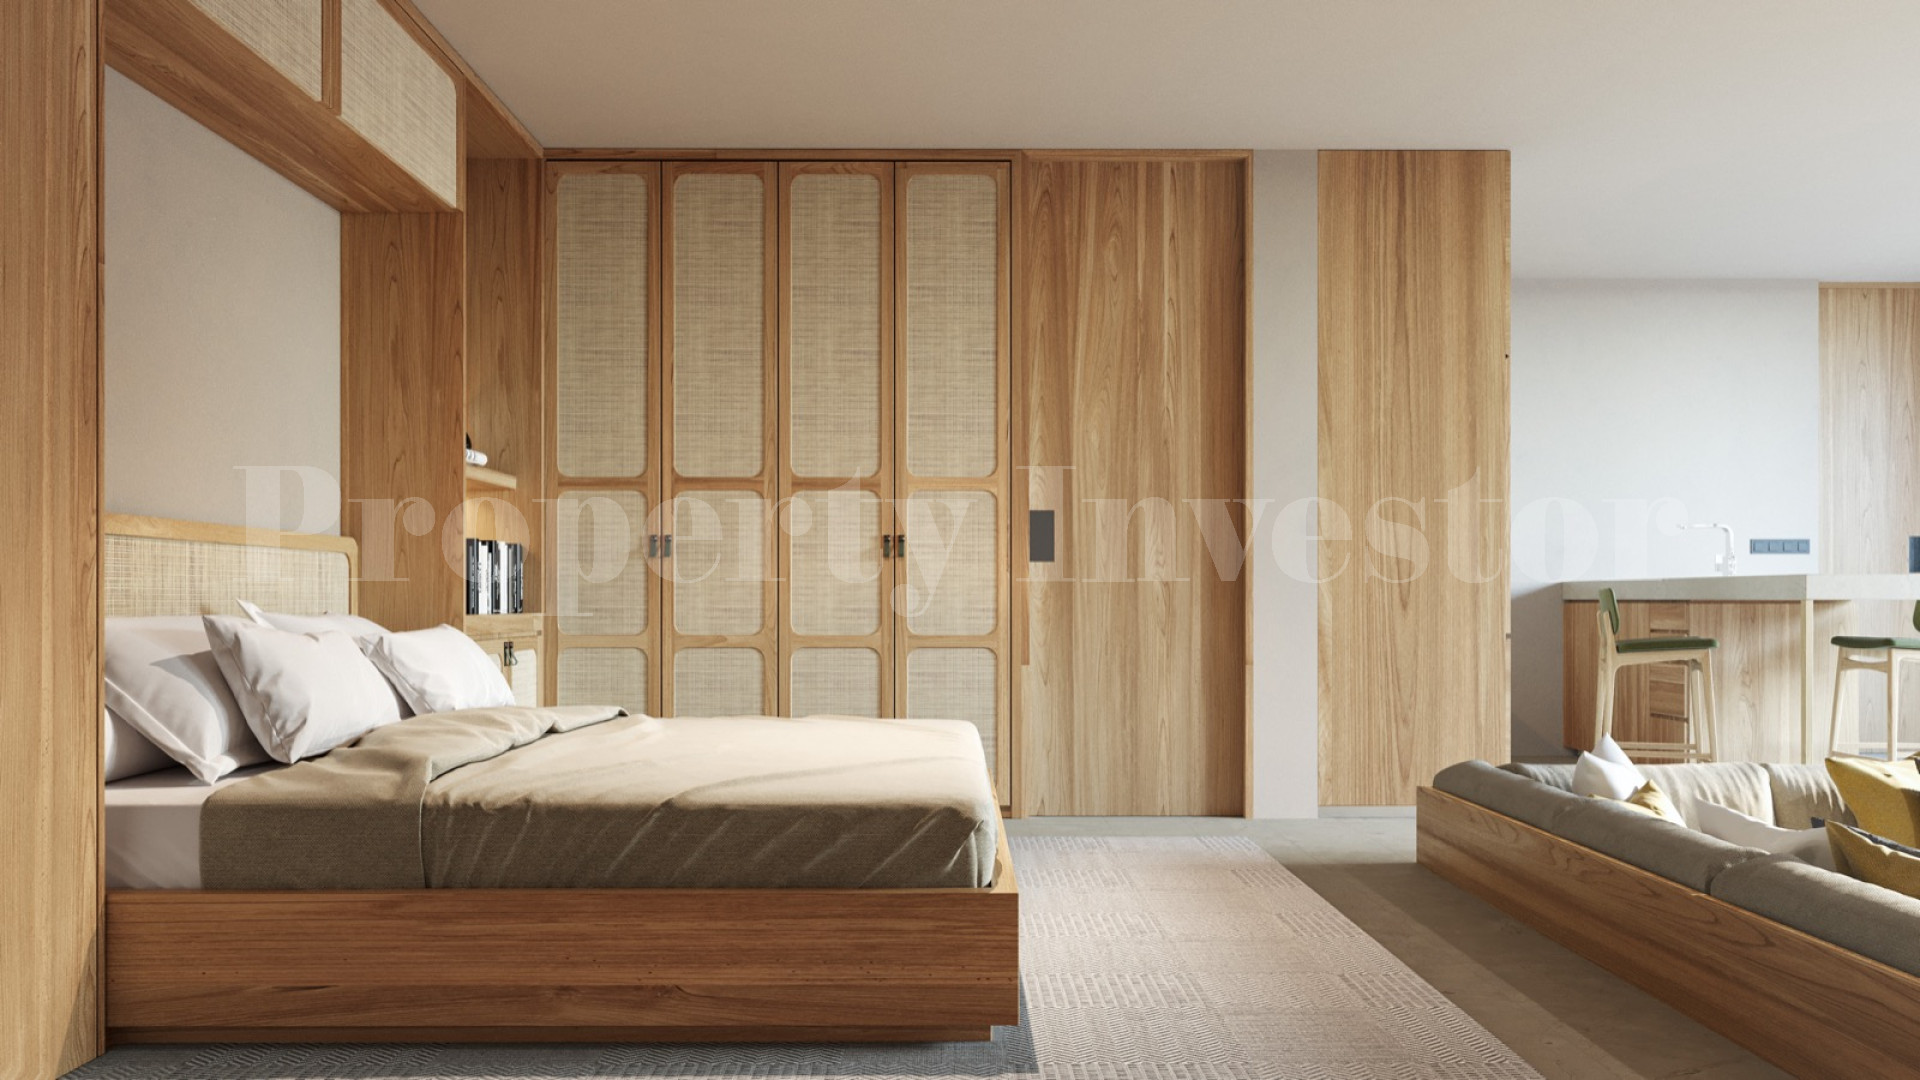 Modern Off-Plan 2 Bedroom Oceanview Luxury Designer Villas for Sale in Uluwatu, Bali from $239,000